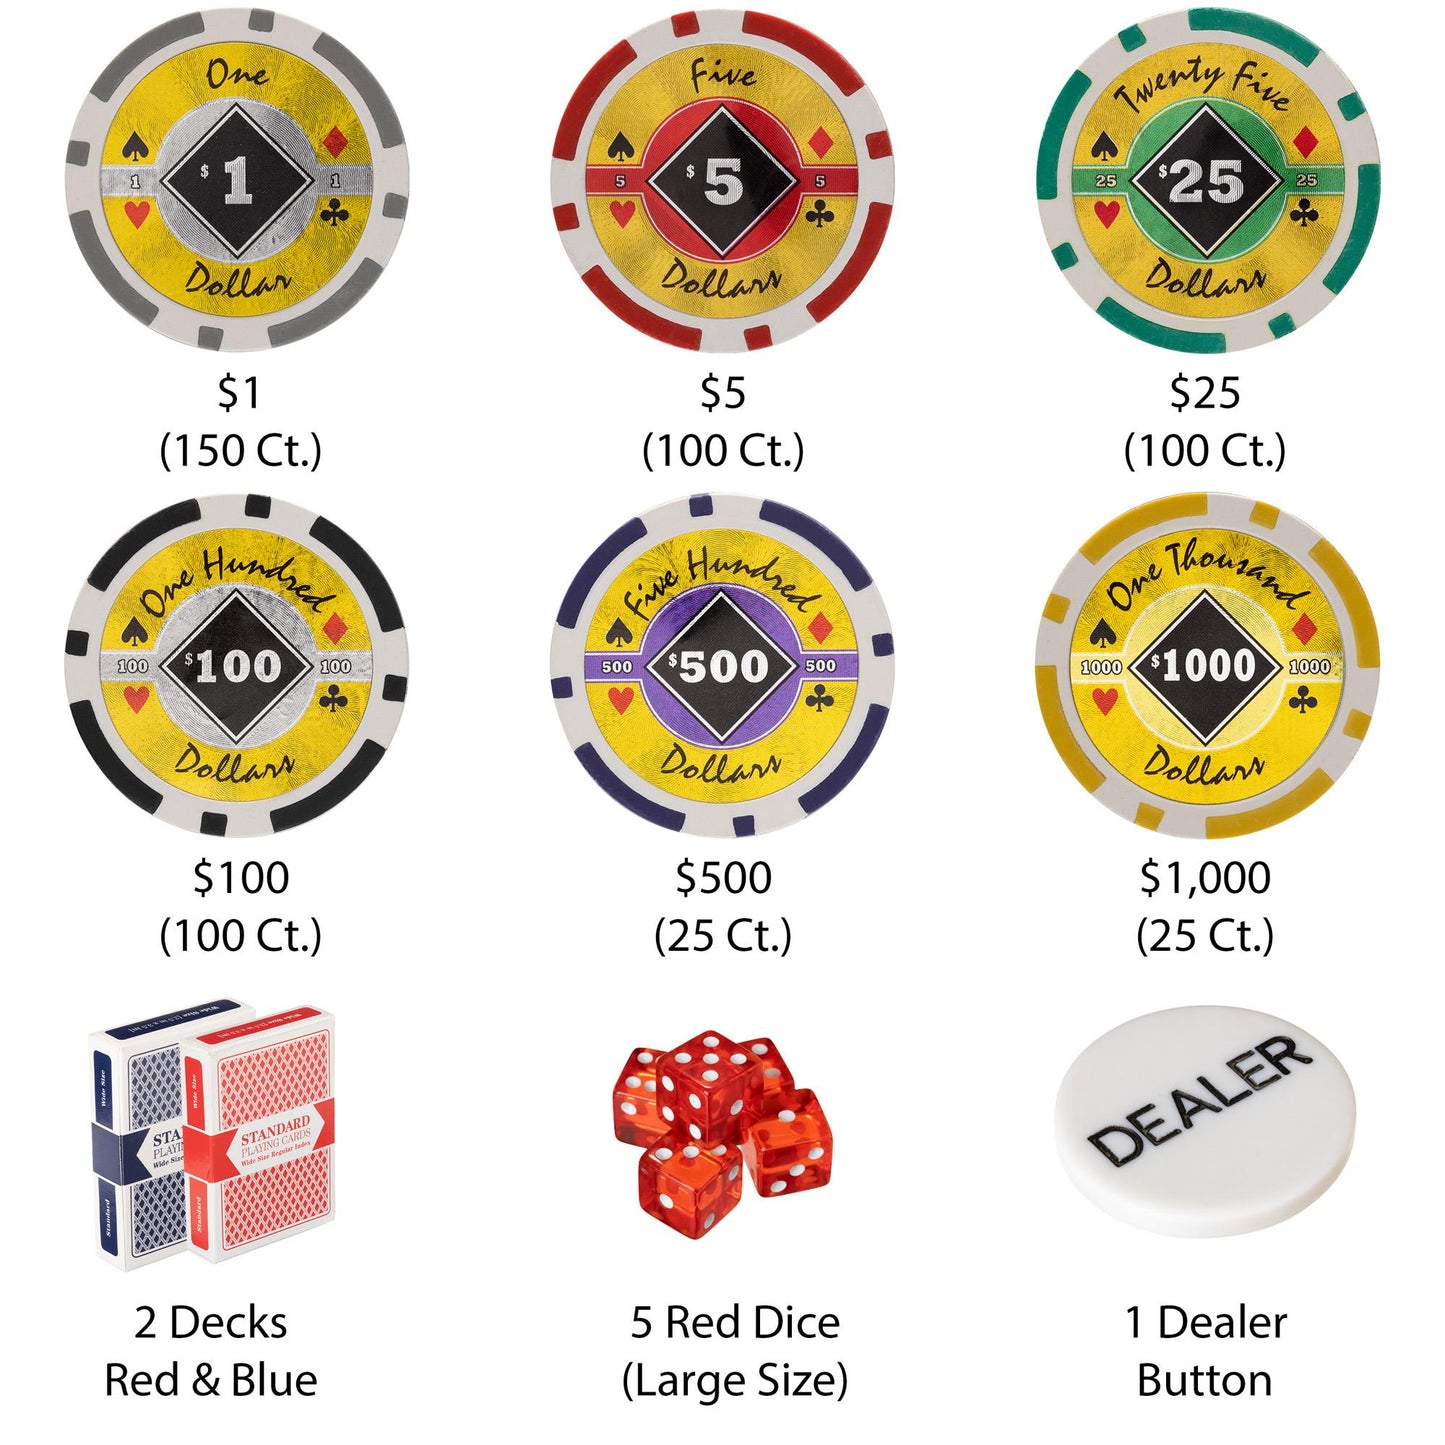 500 Black Diamond Poker Chips with Walnut Case